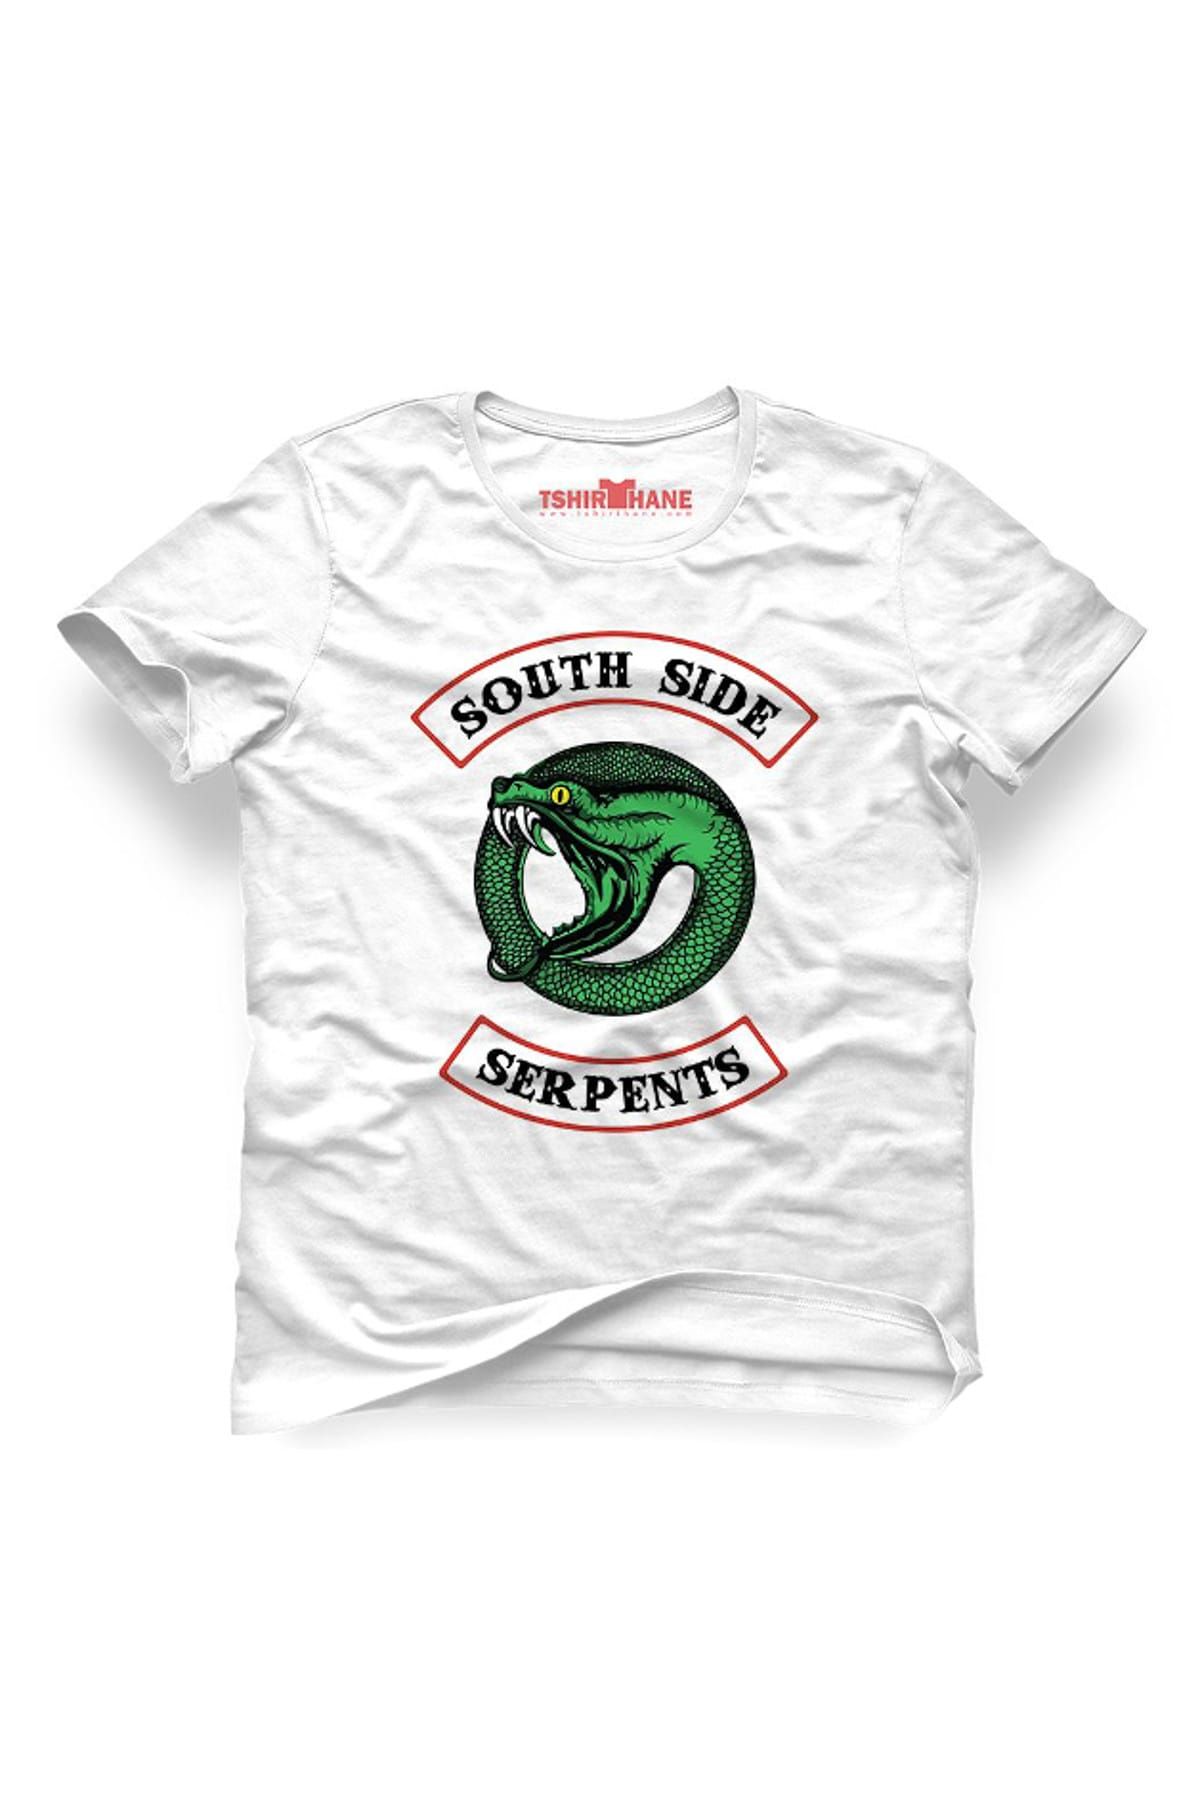 Tshirthane Riverdale Snake south Side Serpents - AC0237